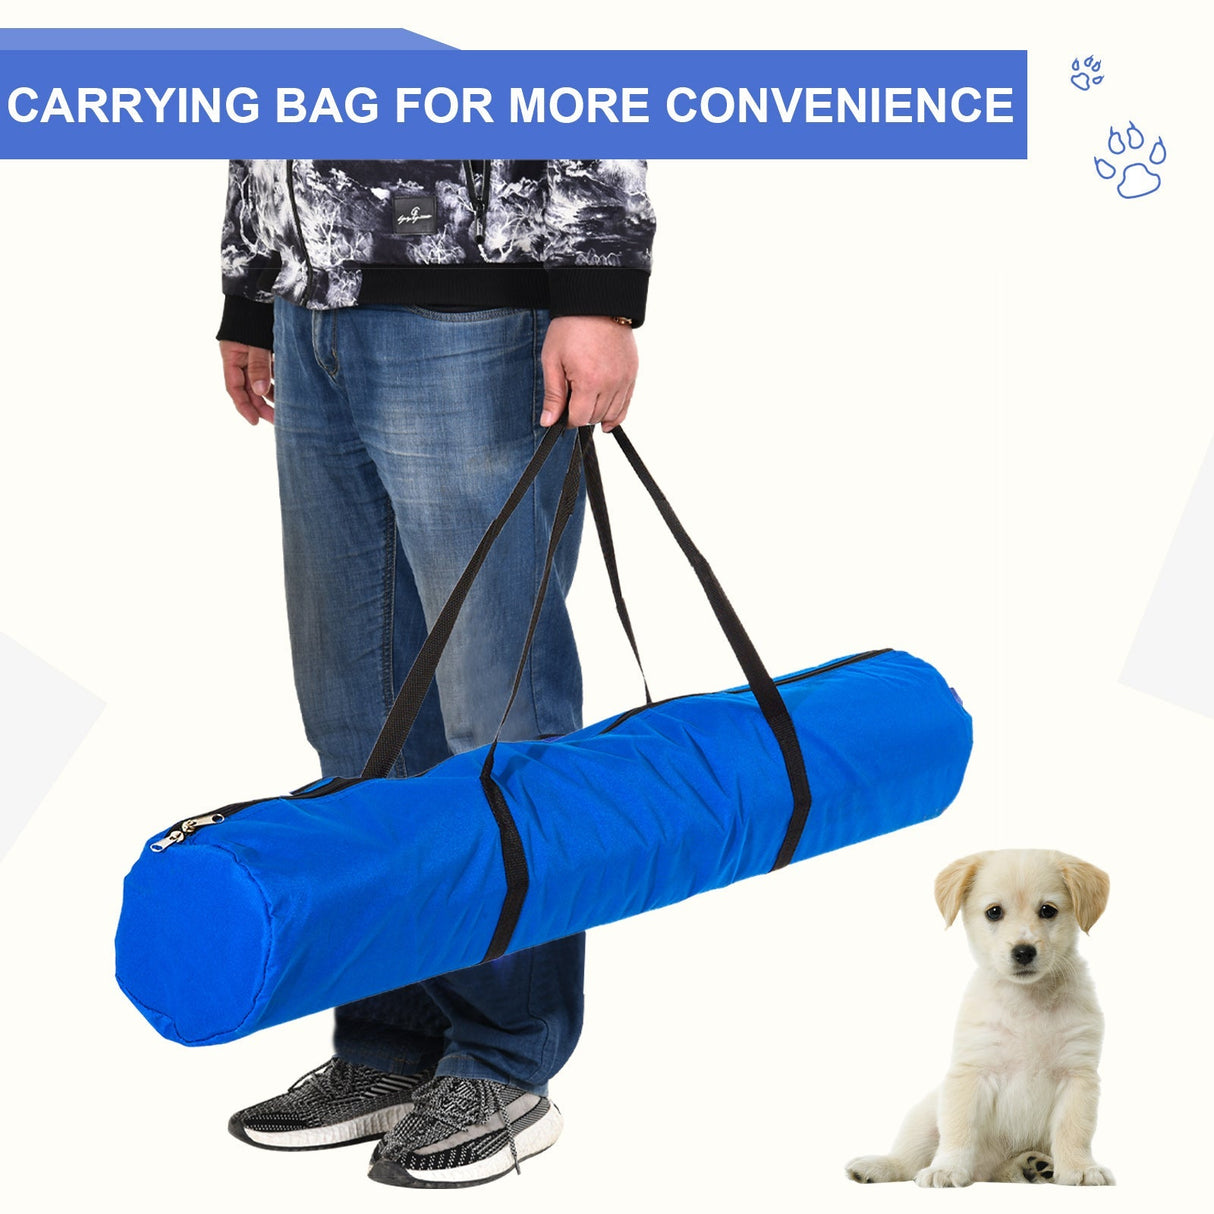 Dog Agility Training Equipment, Play Run Jump Obedience Training Set, Adjustable (Pole + Hoop + Hurdle), PawHut,